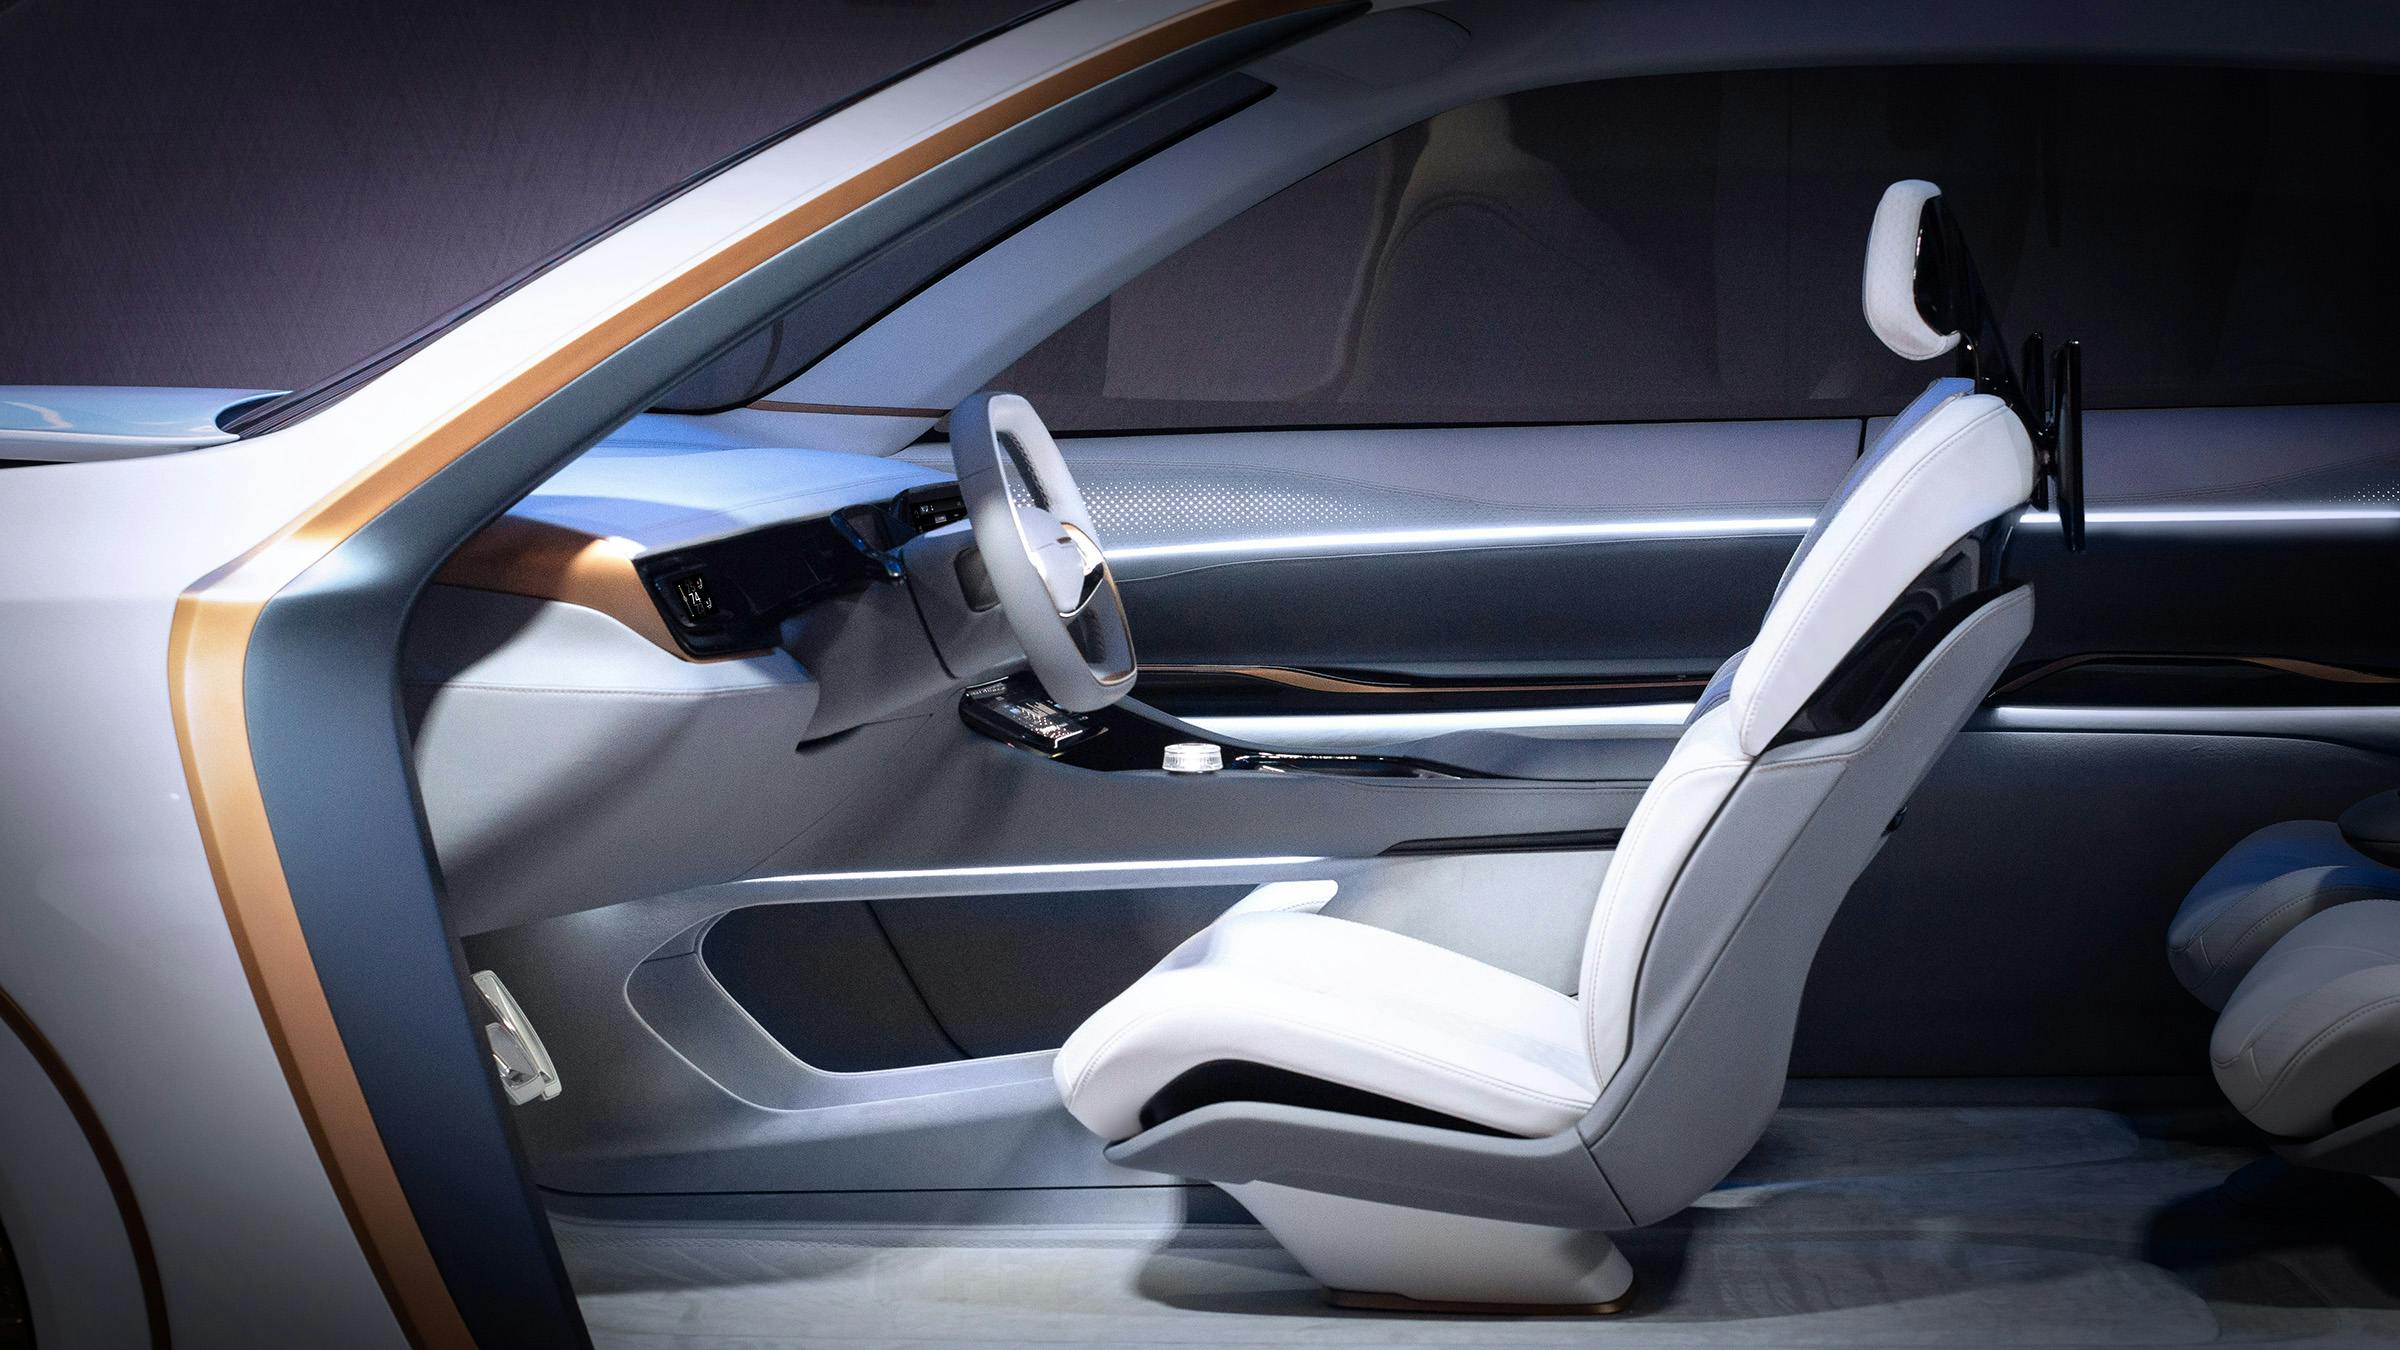 2020 Airflow Vision interior detail front seats